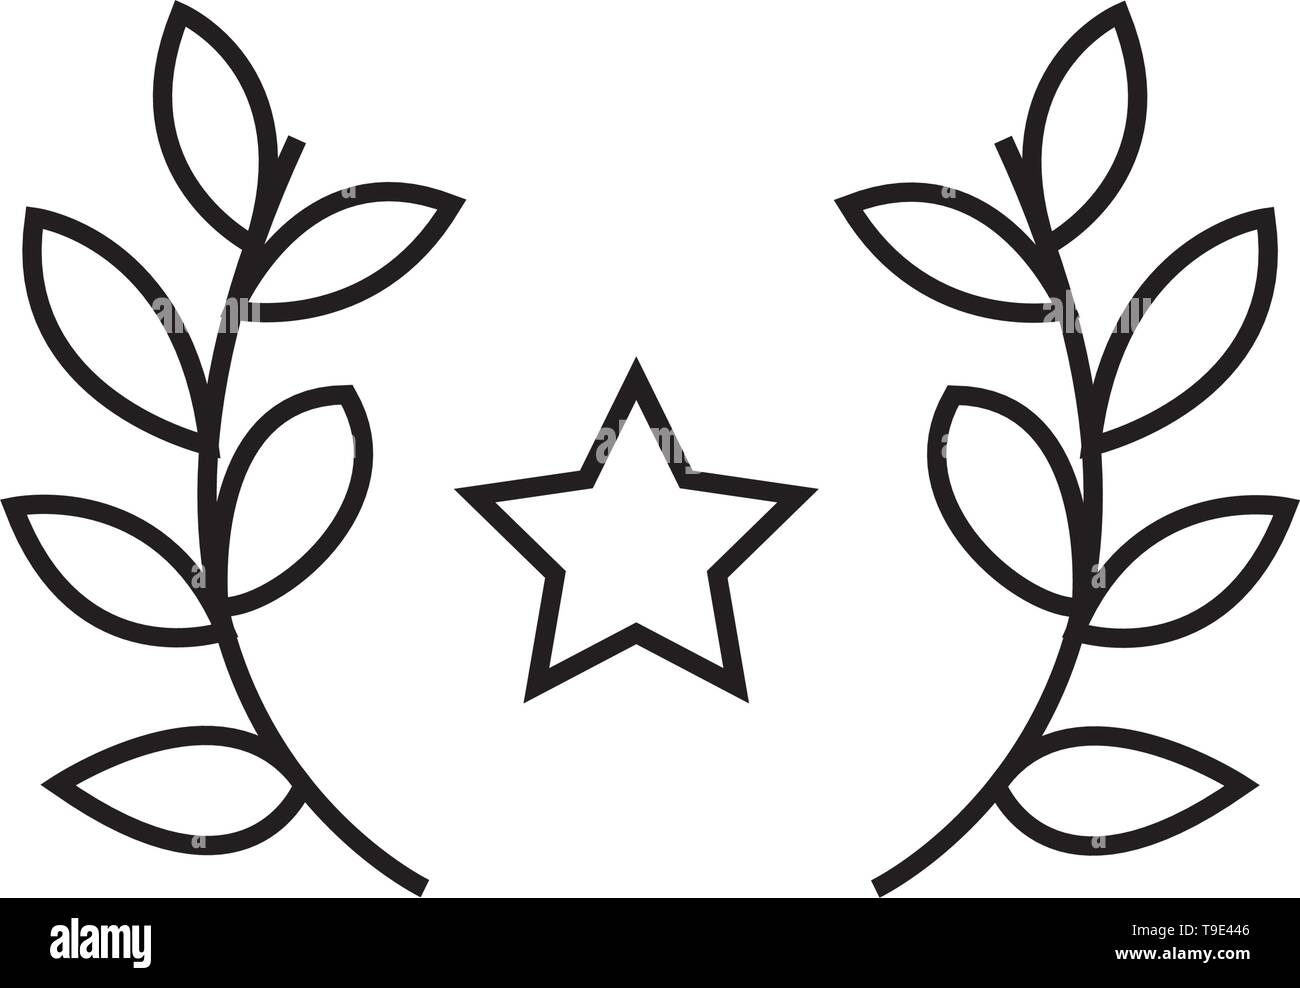 Award winning symbol illustration vector on white background Stock